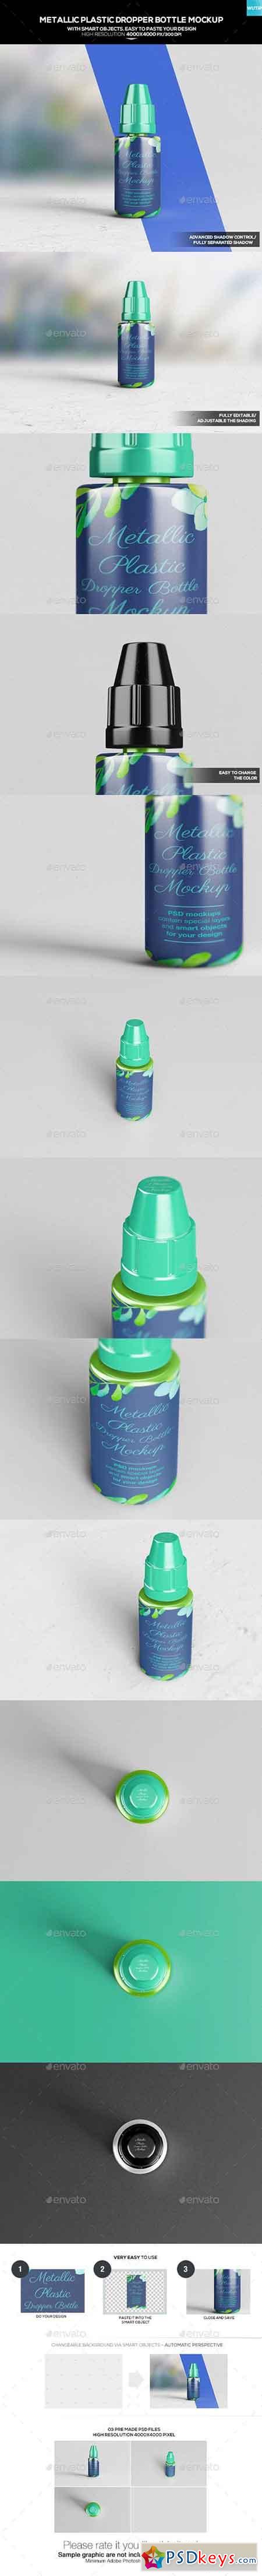 Metallic Plastic Dropper Bottle Mockup 20206340